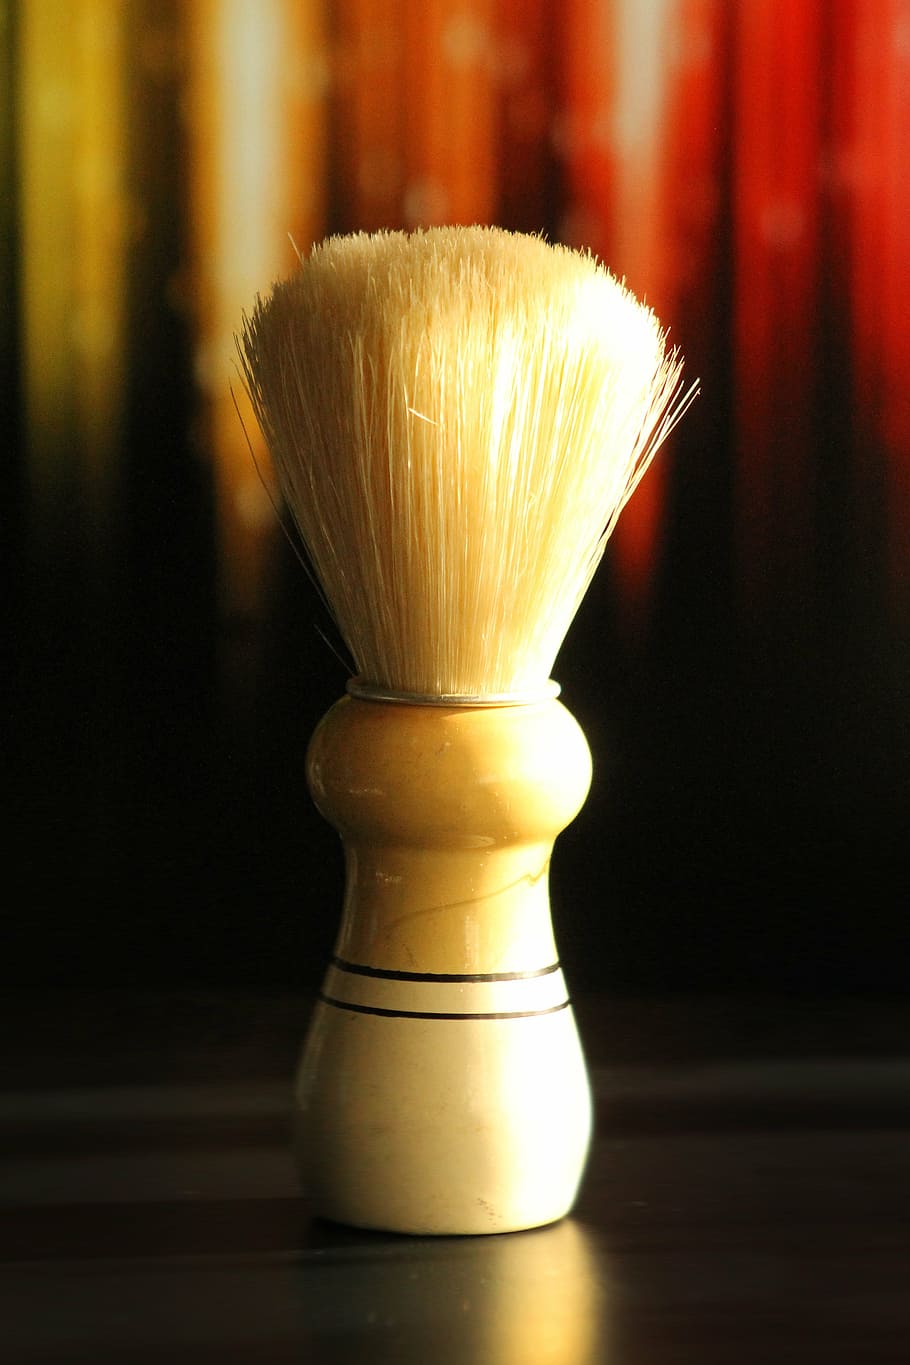 razor, shaving brush holders, hair, shaving, retro, old, antique, traditional, style, body cleansing